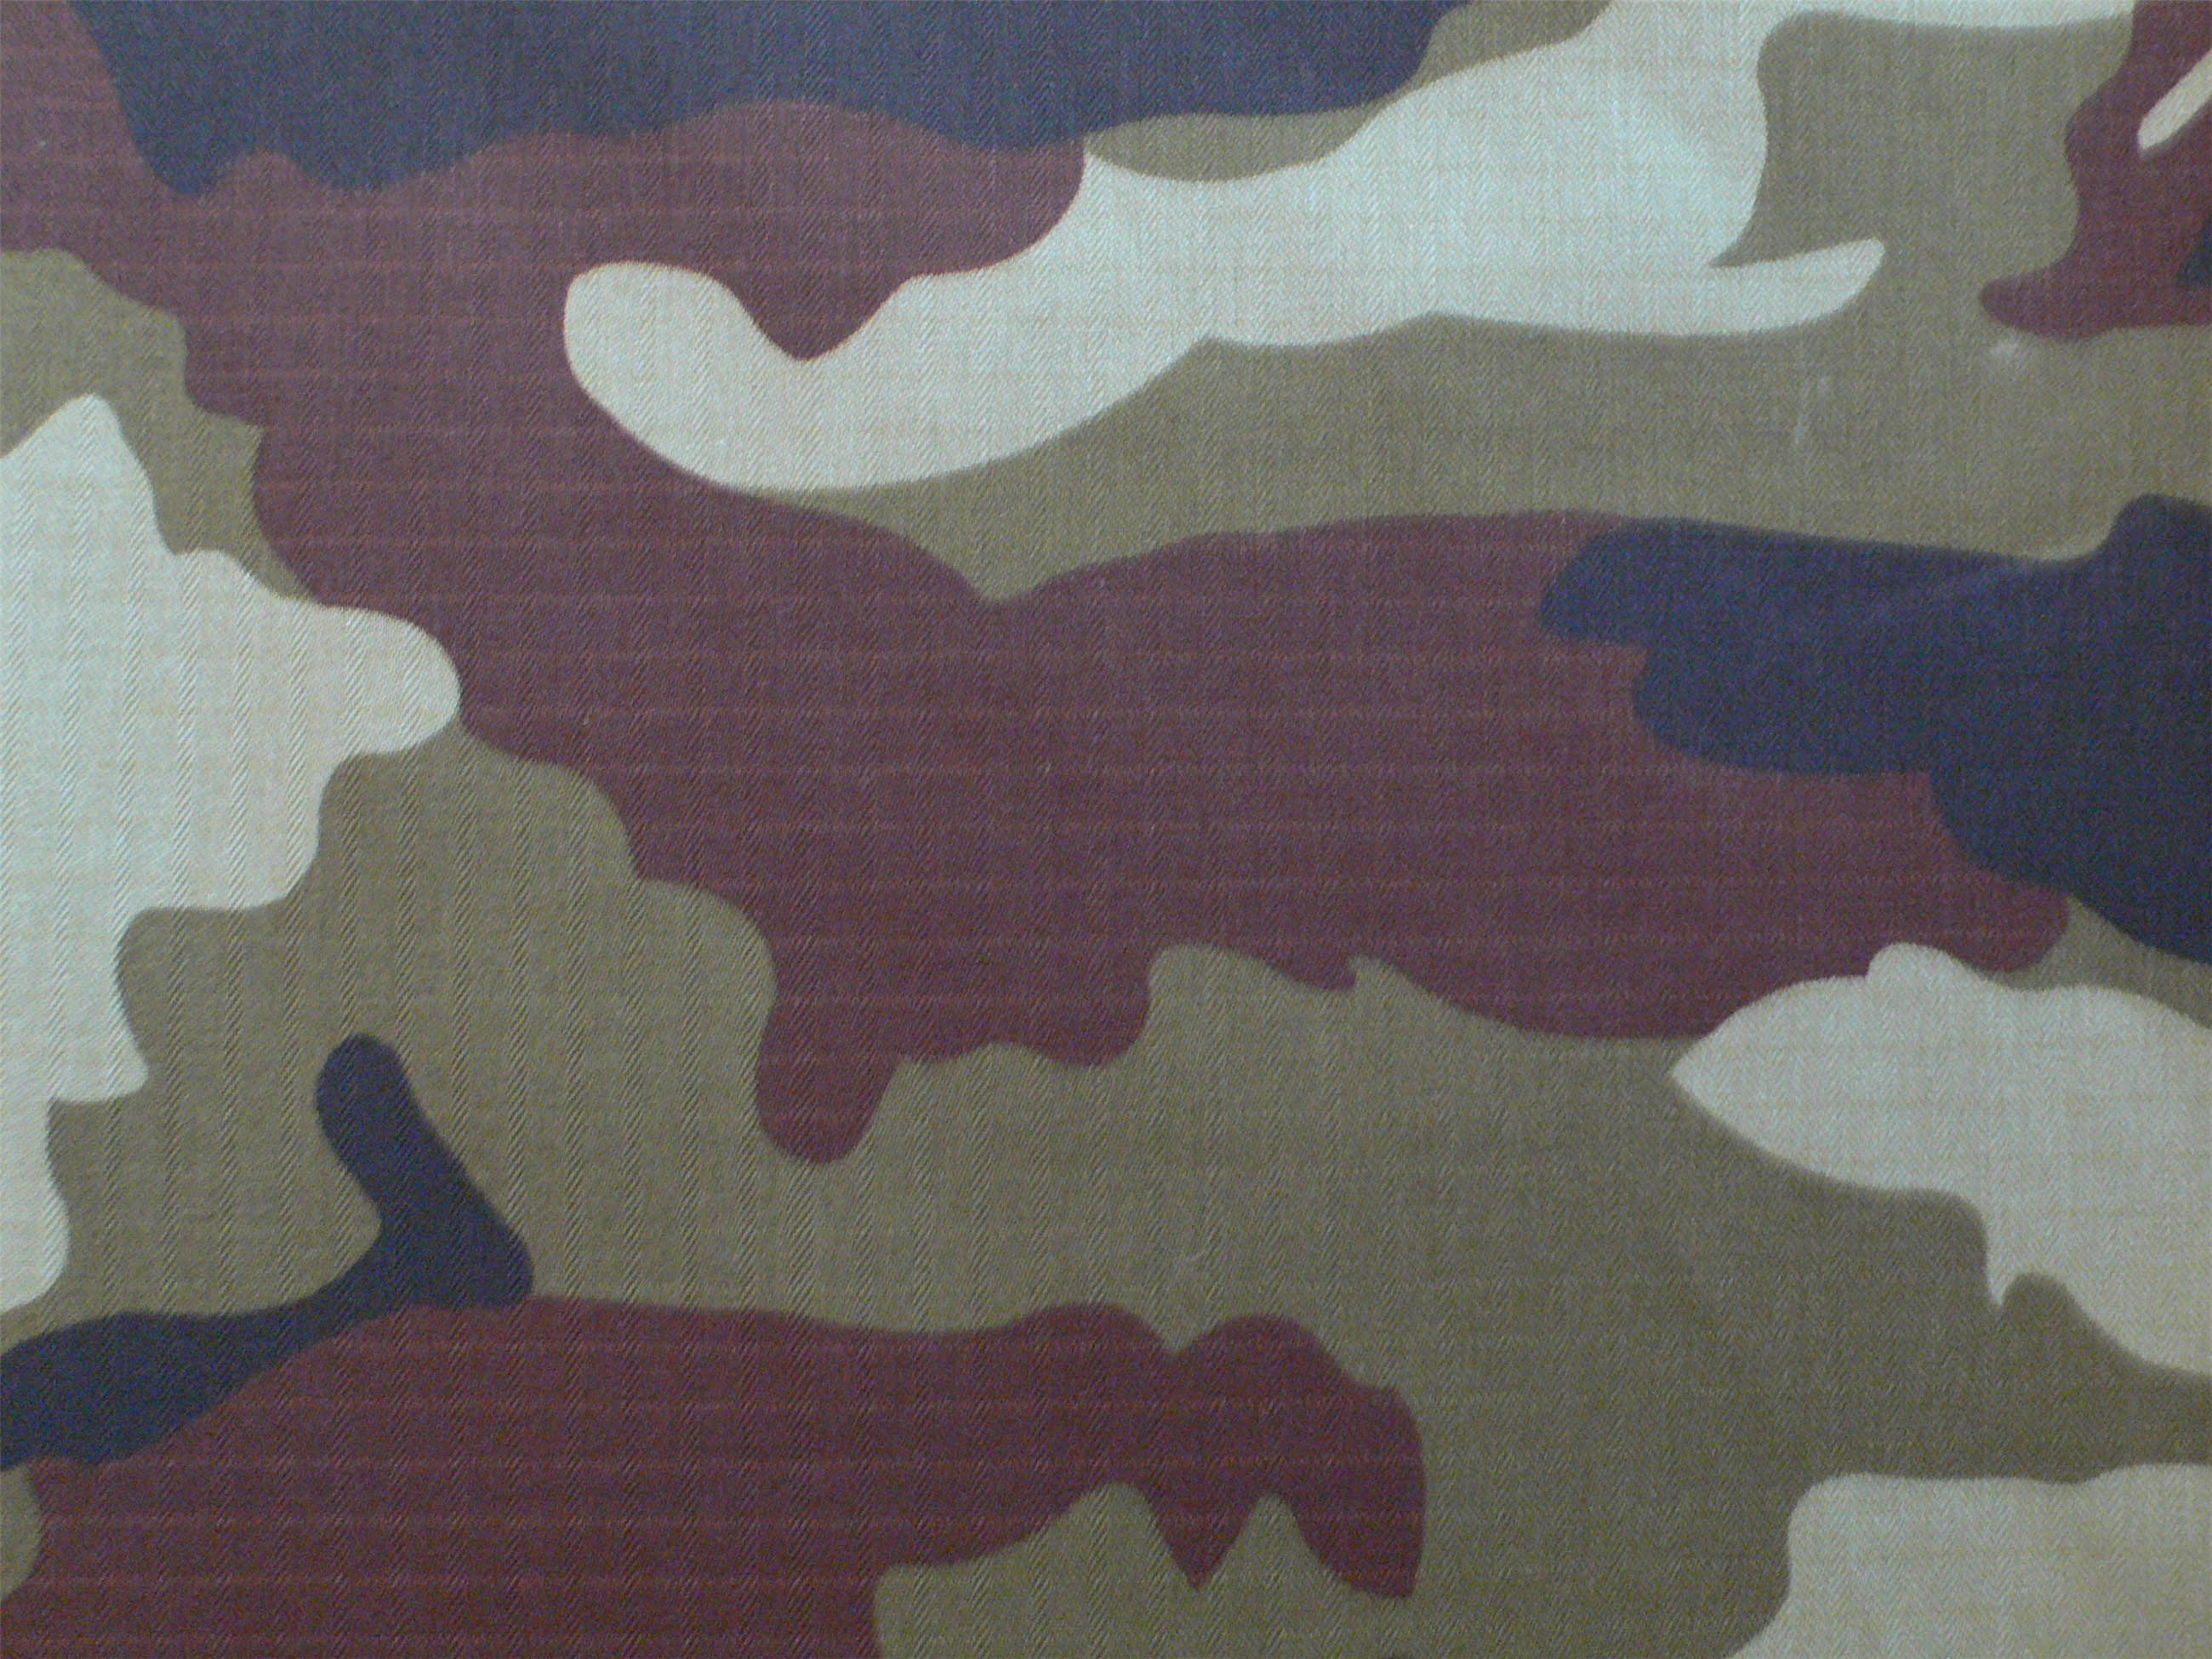 Herringbone Military Camouflage Canvas Fabric for Ireland